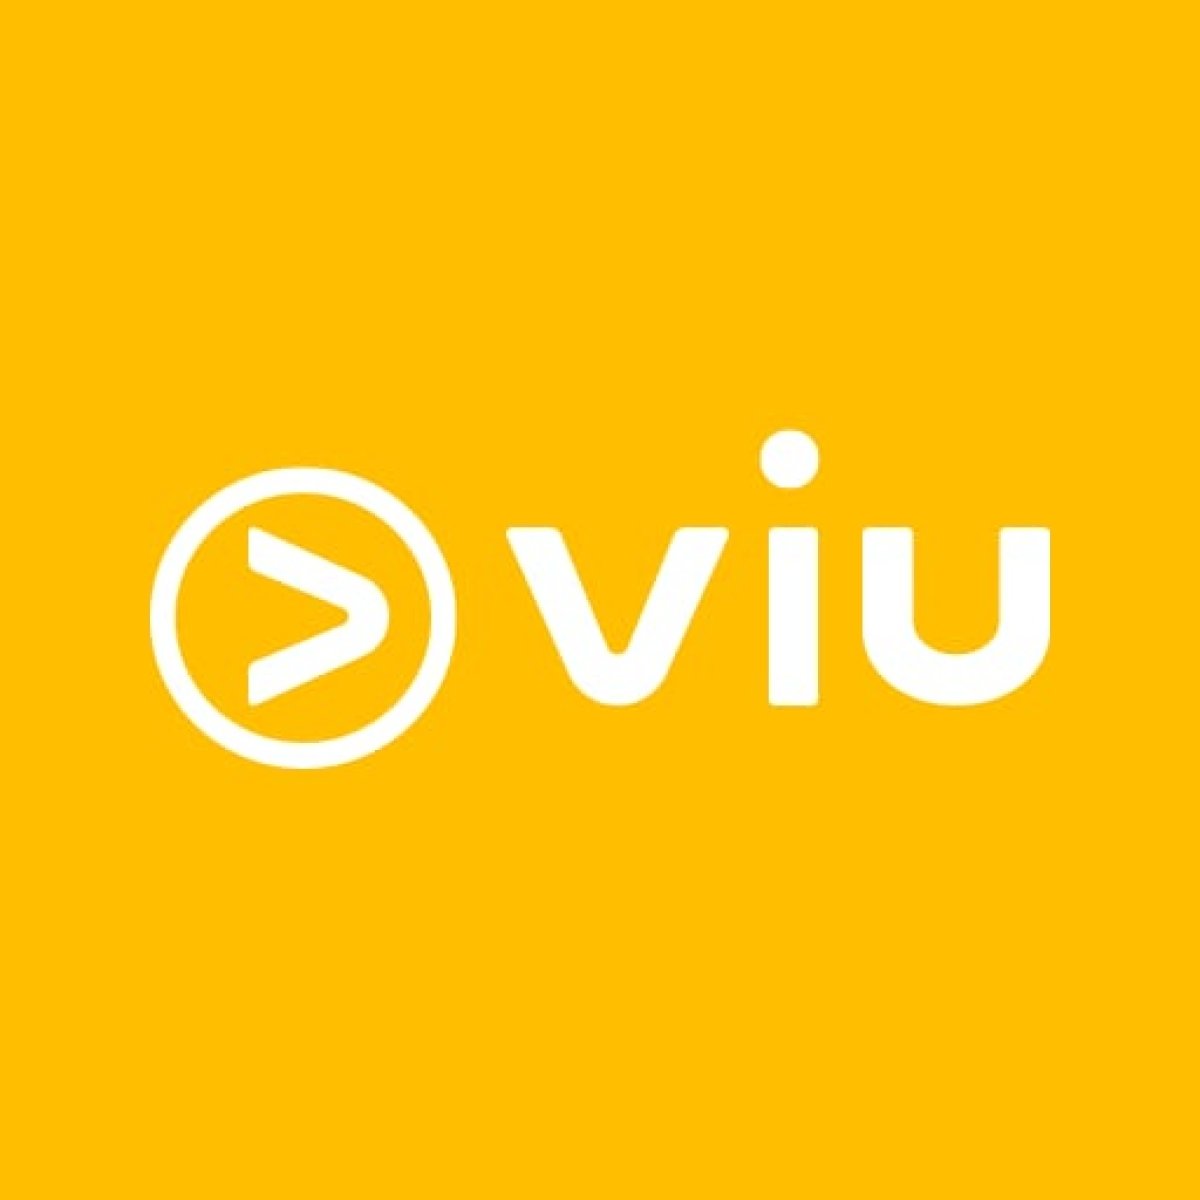 《Viu》تطلق قائمة رمضانية بالعروض الأولى الحصرية والمسلسلات الأصلية